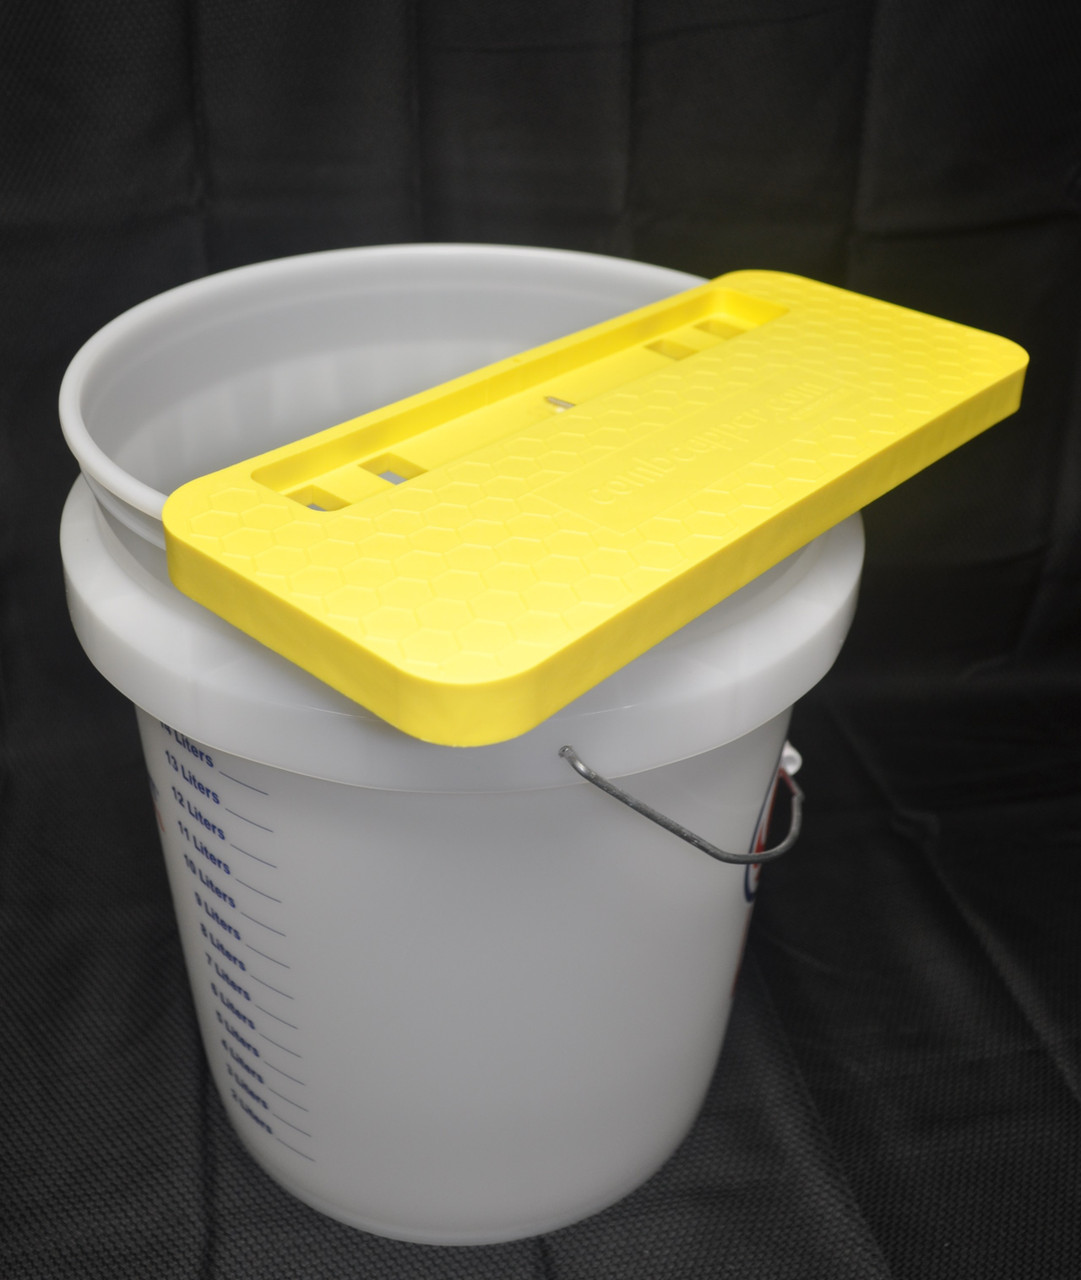 Comb Capper shown on 5 gallon bucket